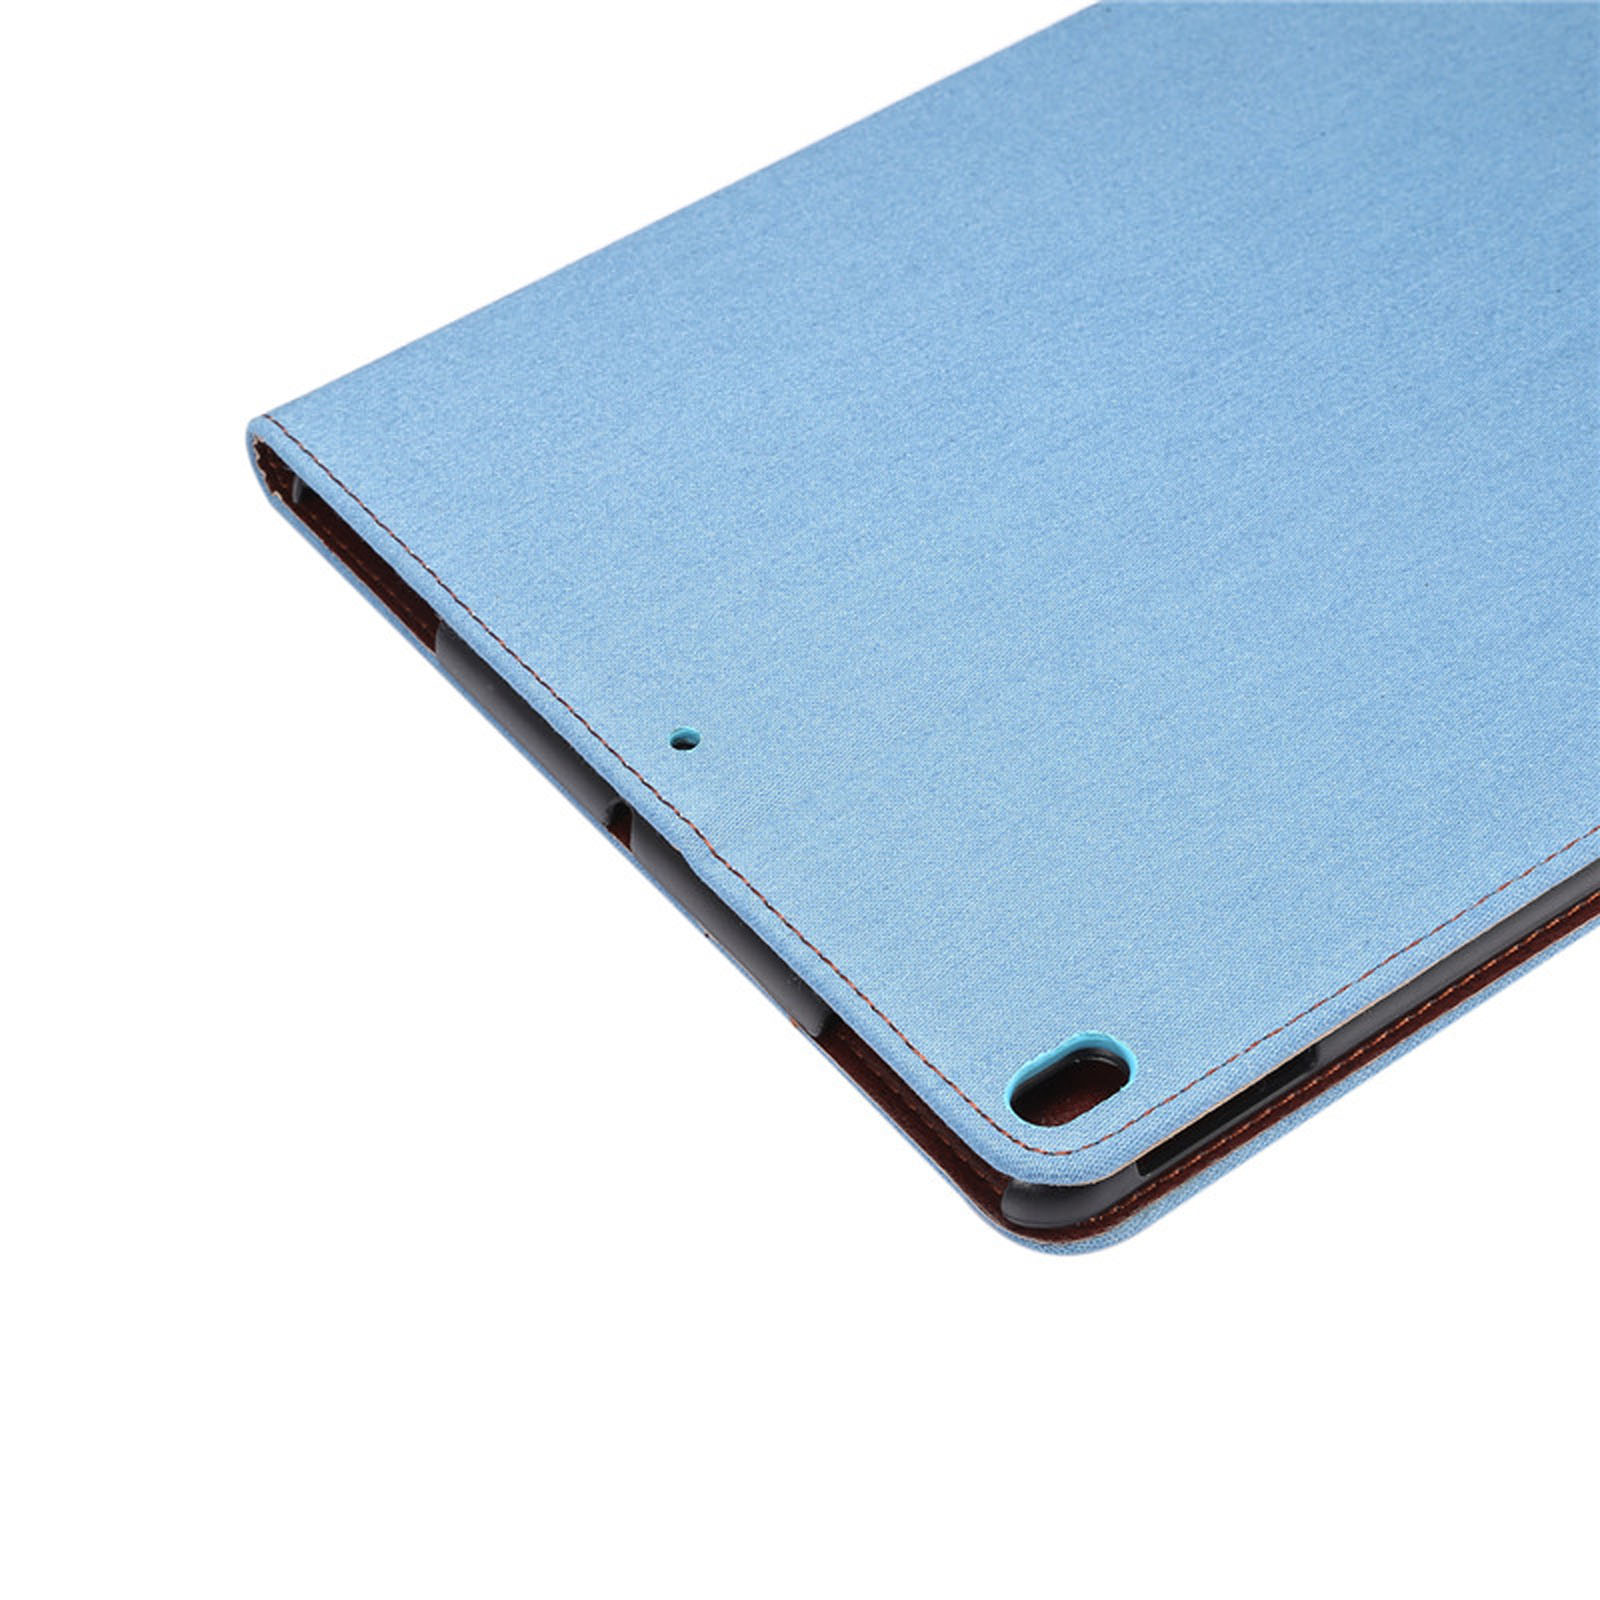 Hellblau Pro Kunststoff, 2019 Schutzhülle 10.5 Zoll Hülle iPad iPad 2017 LOBWERK 3 Apple für Air Bookcover